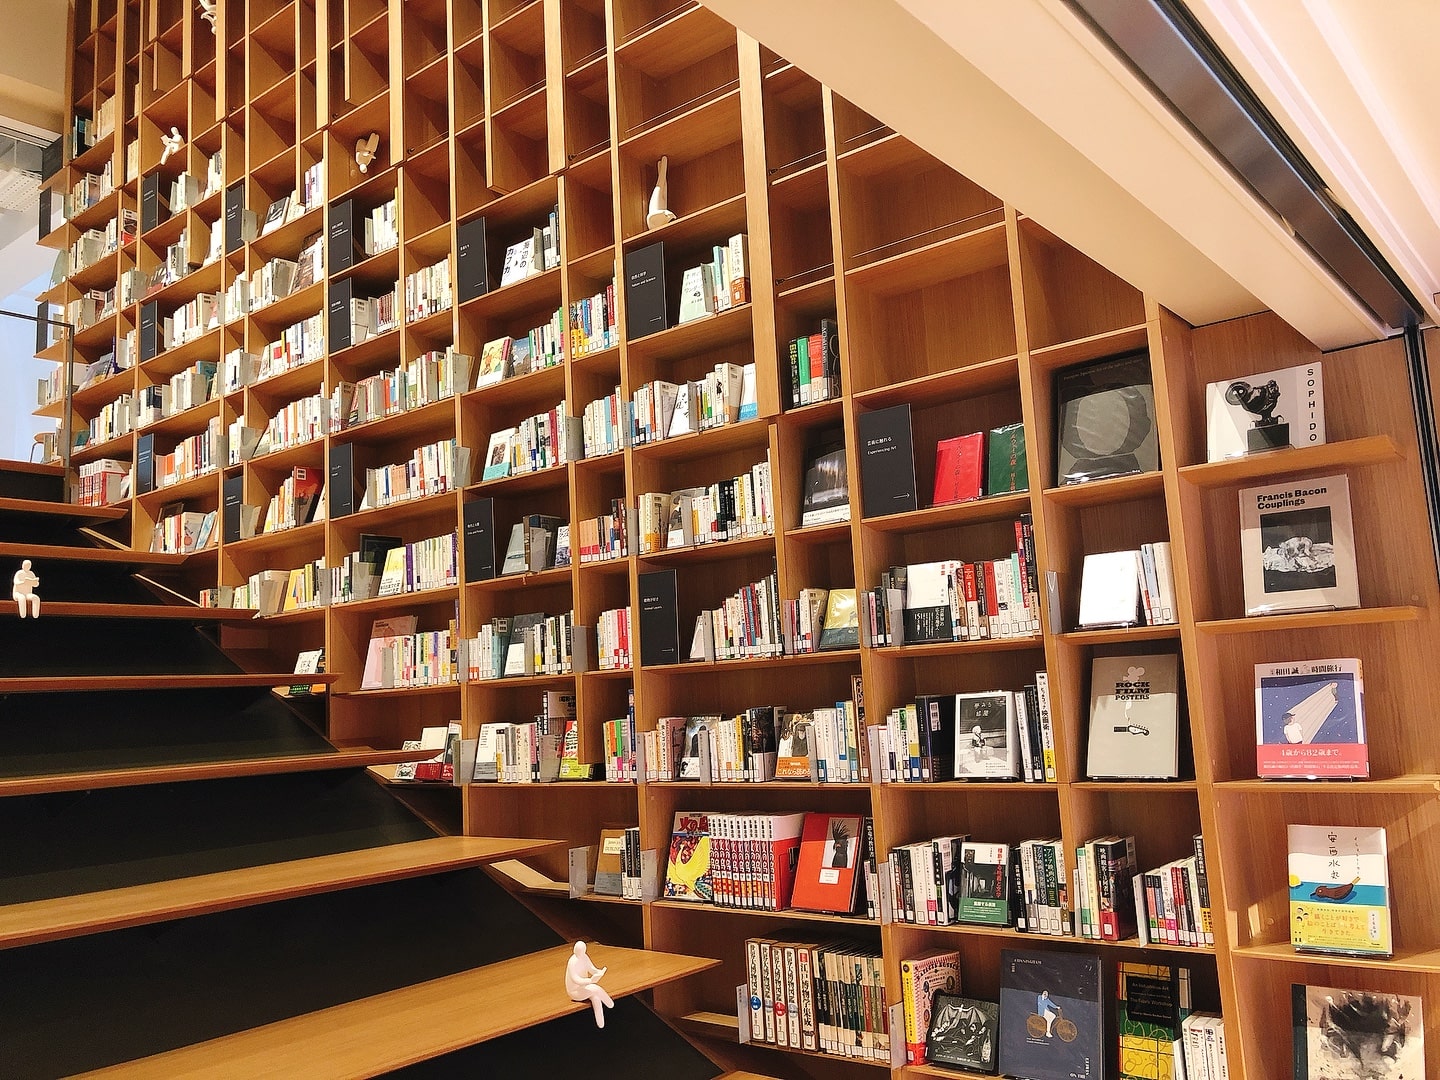 Themed books lining Stair Bookshelf